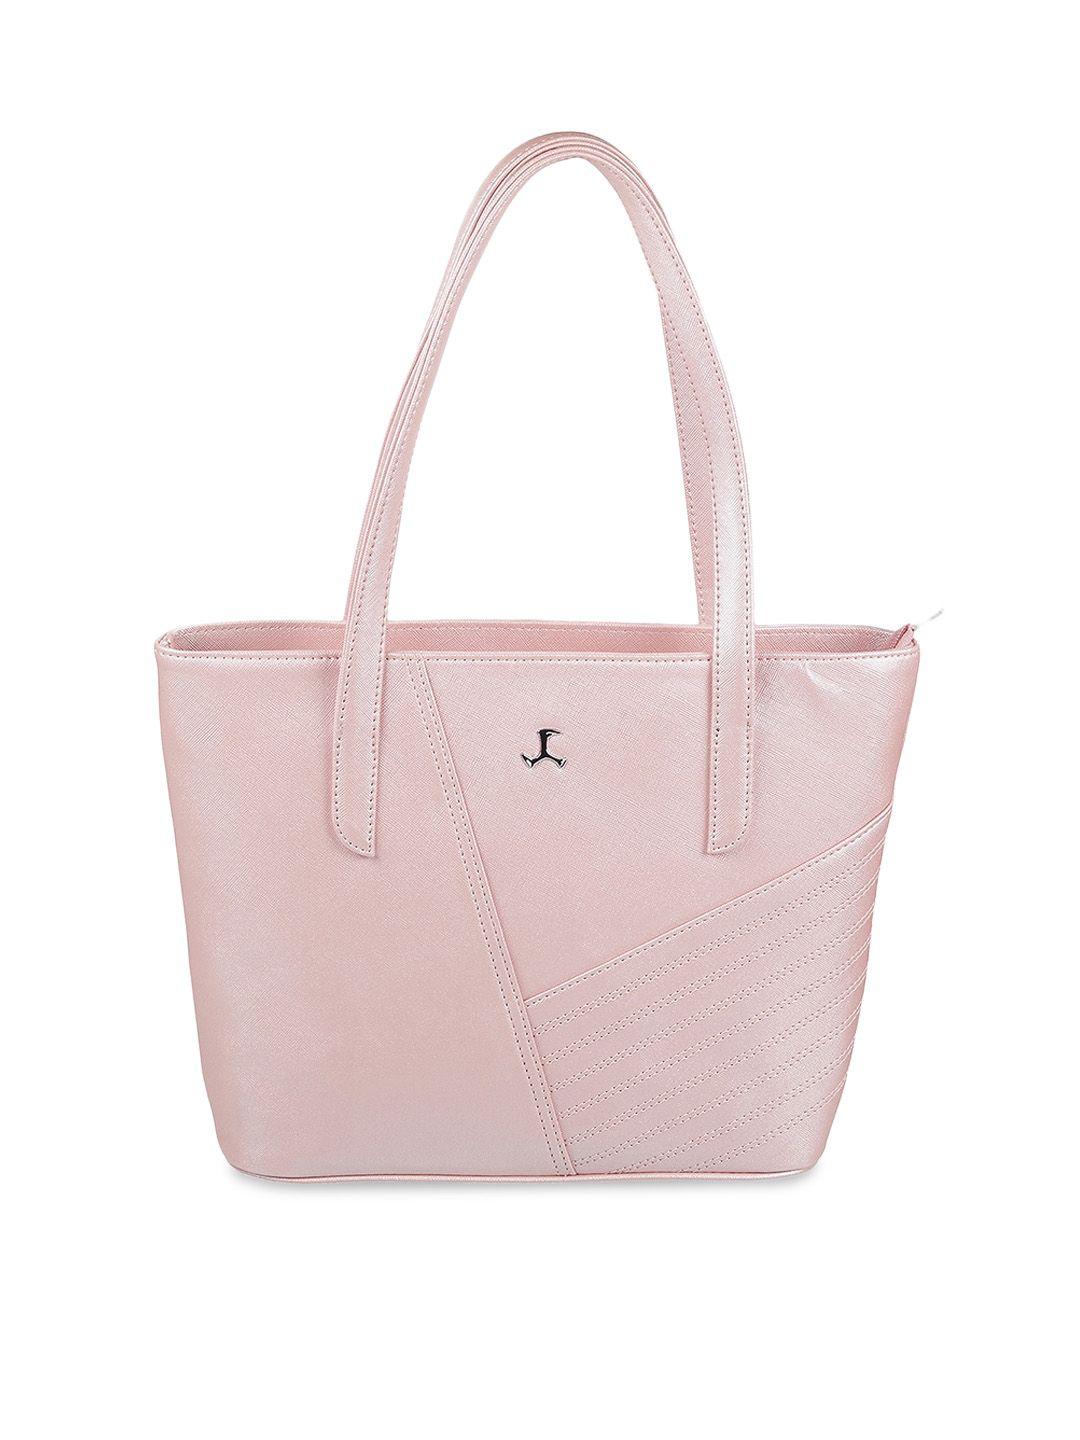 mochi-pink-shopper-tote-bag